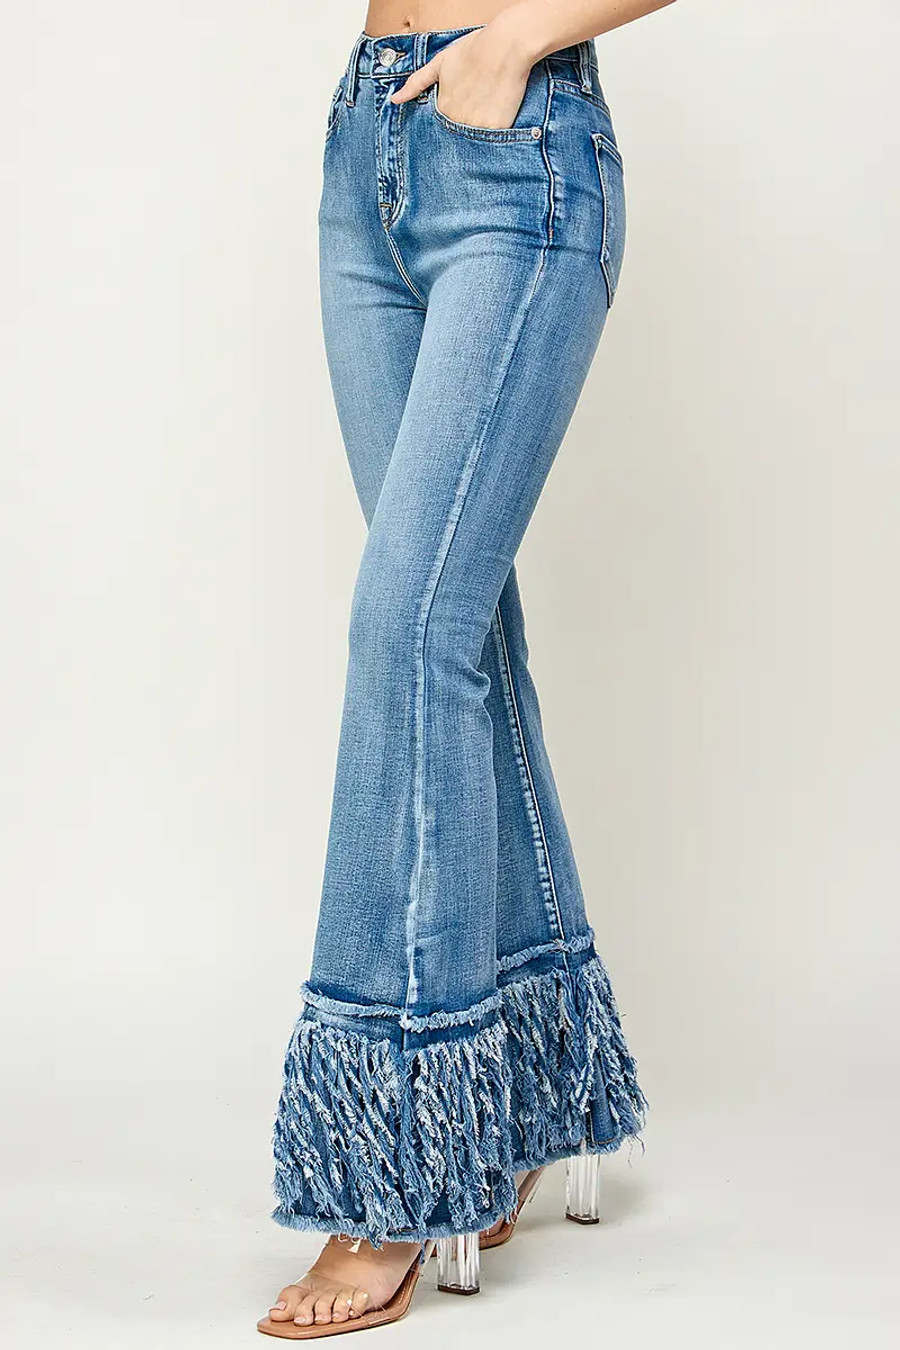 I&M Jeans - High Rise - Frayed Flare - Medium Wash